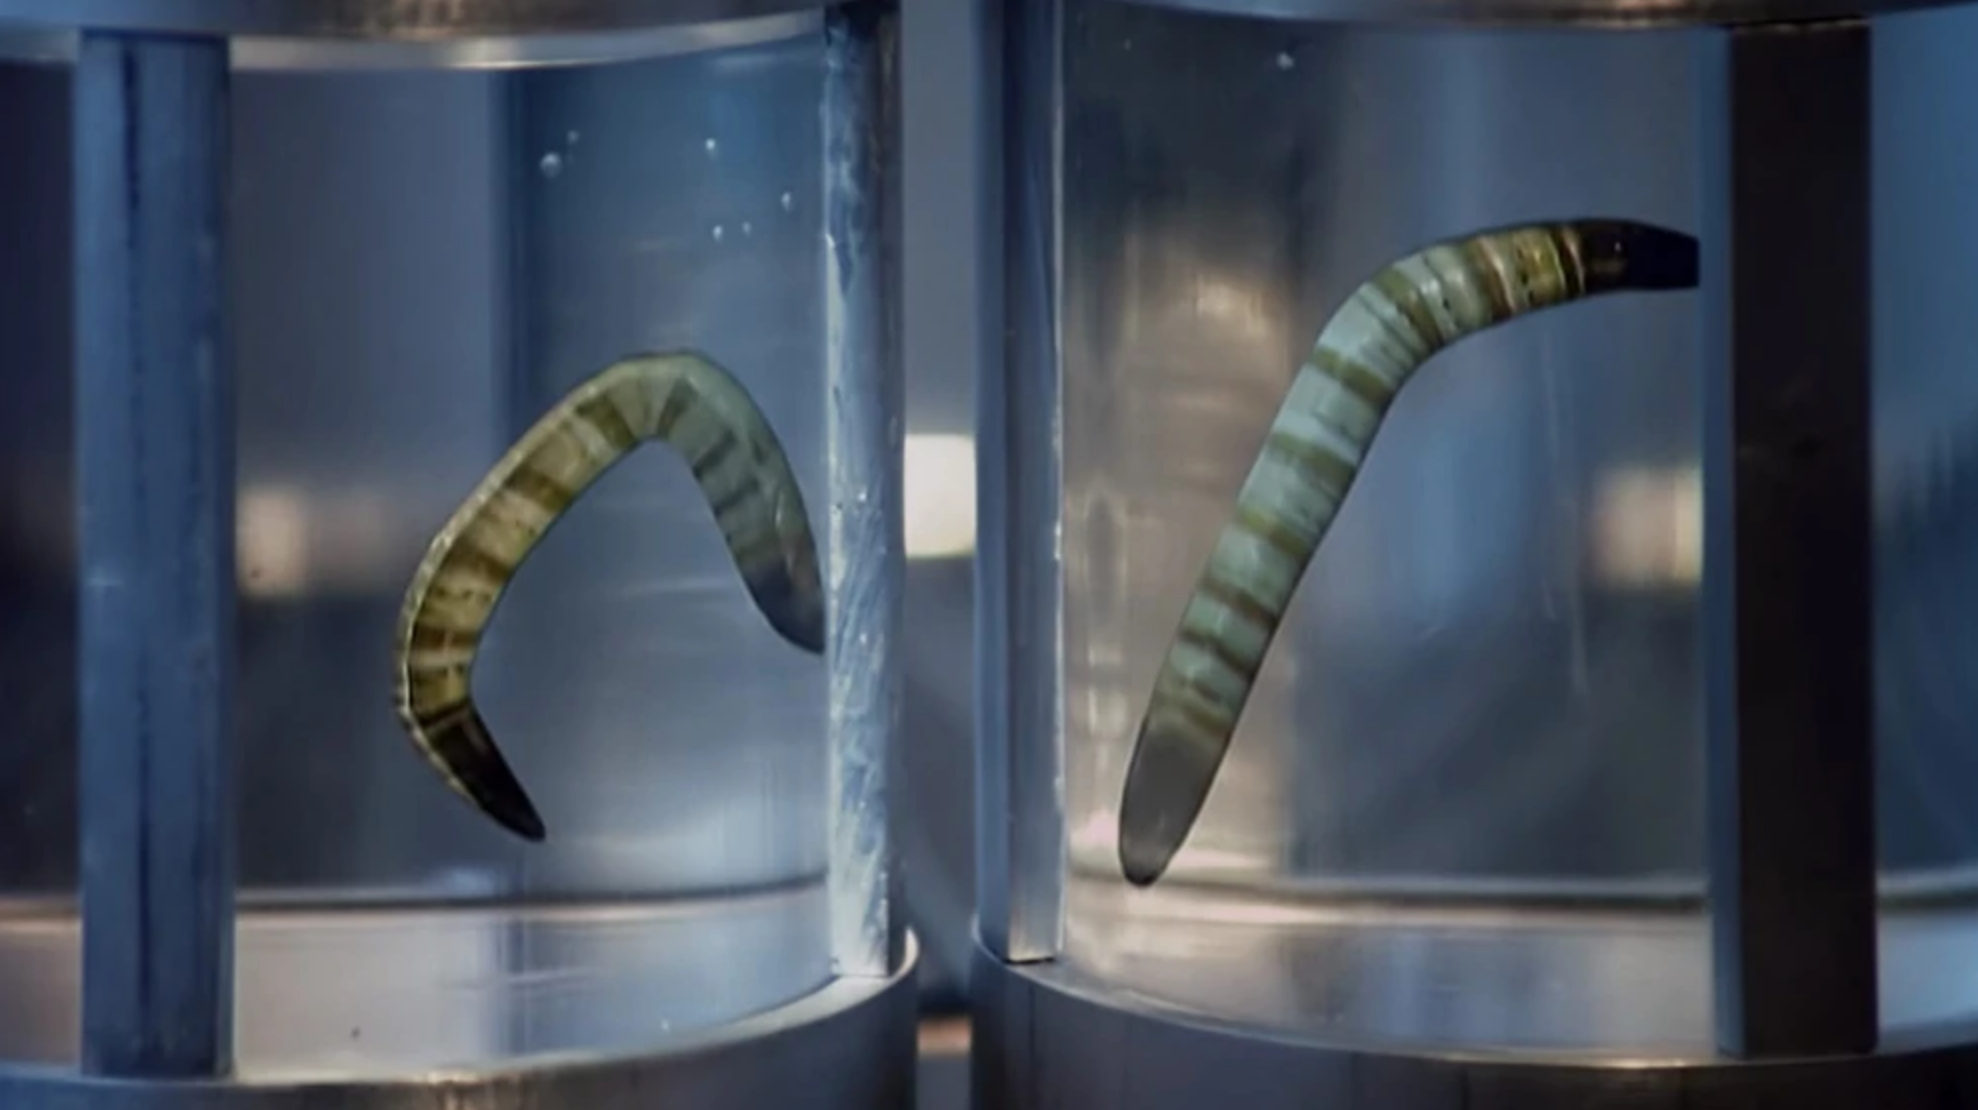 Segmented worms suspended in liquid in jars